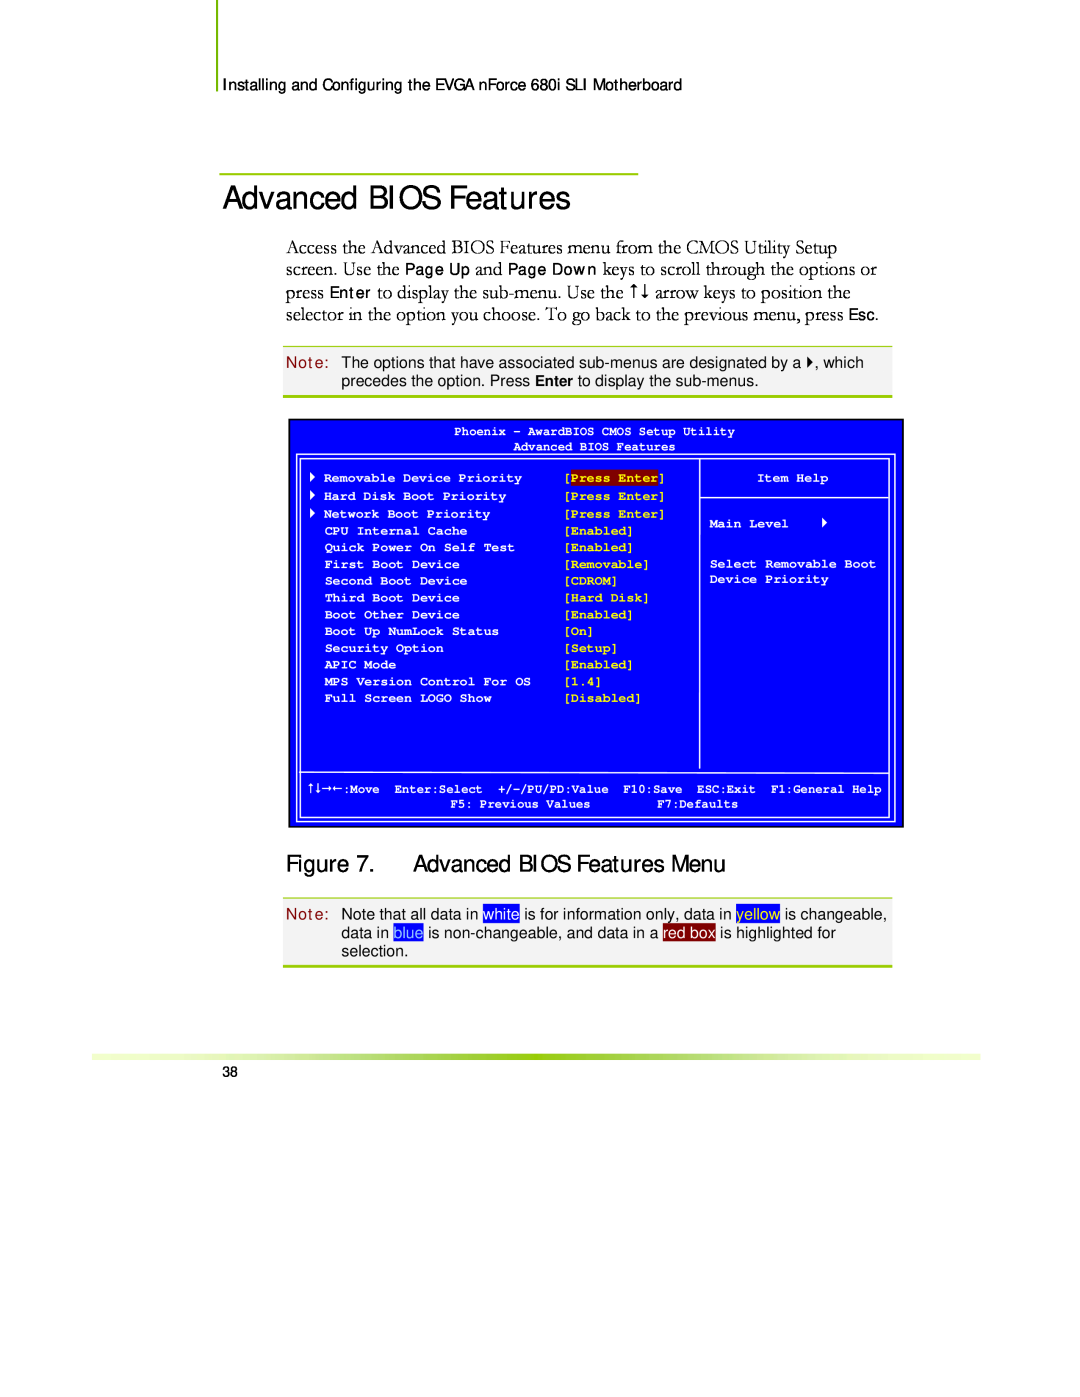 EVGA 122-CK-NF68-XX manual Advanced BIOS Features Menu 